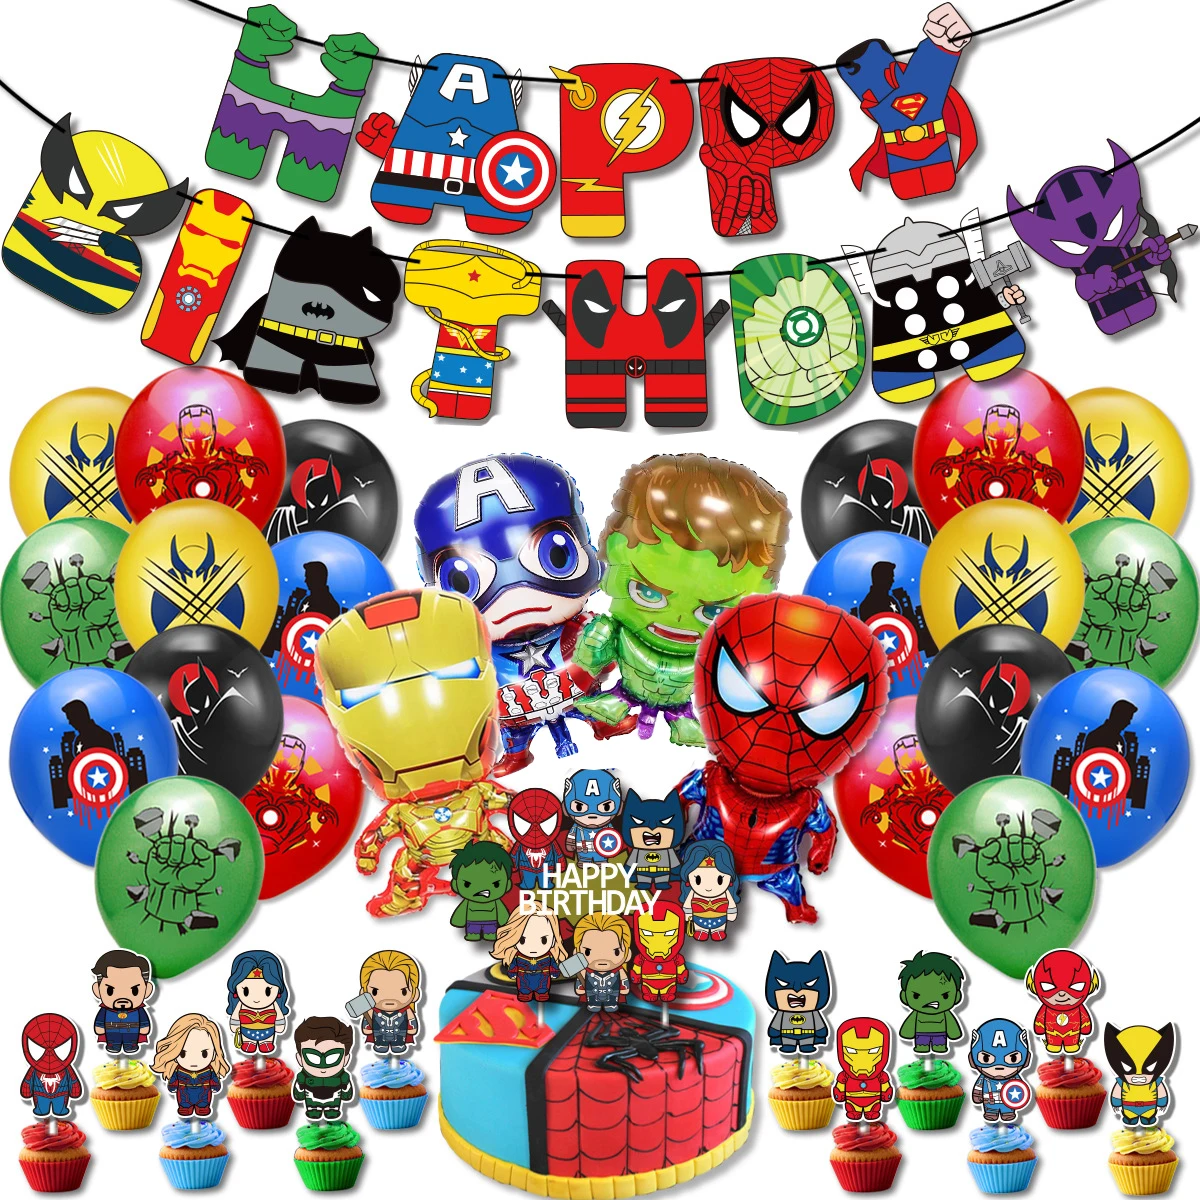 

Superhero Birthday Party Decoration The Avengers Party Supplies Spiderman Hulk Iron Man Banner Balloon Decoration Baby Shower